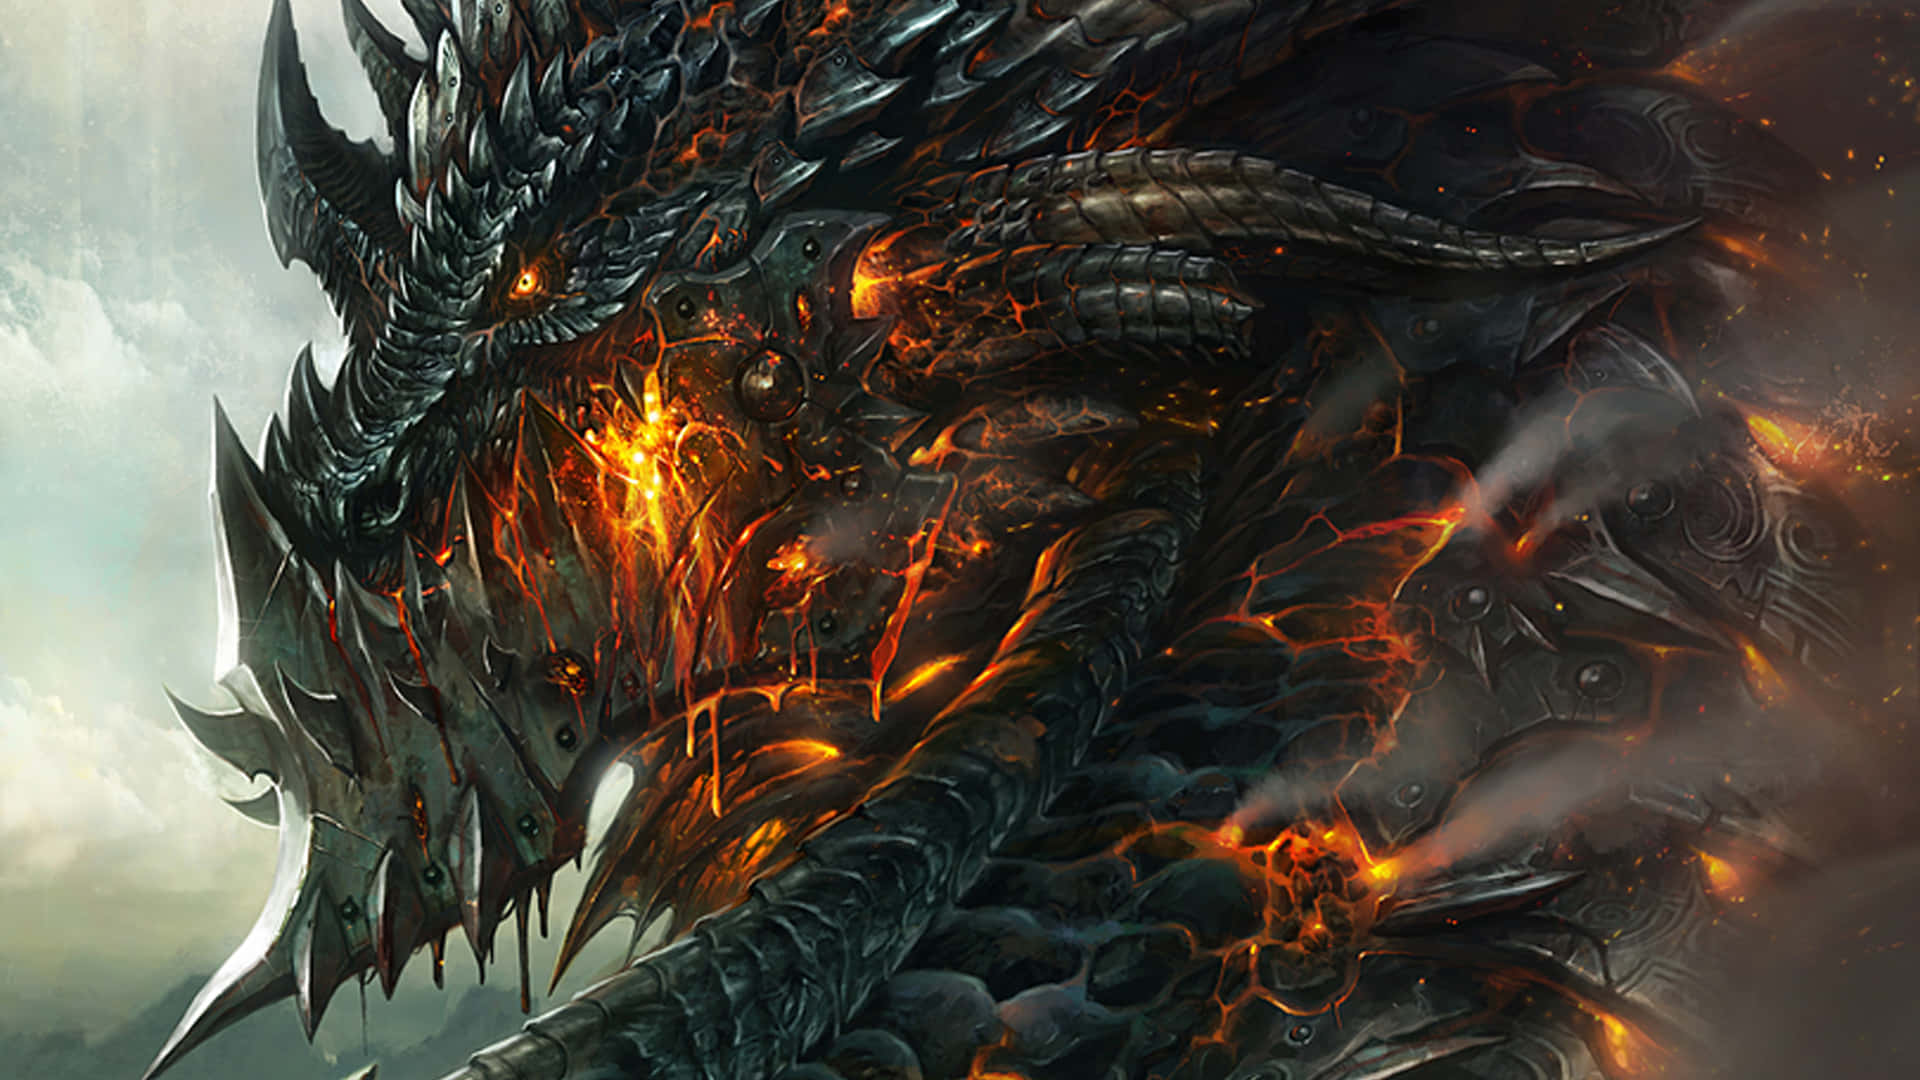 epic dragon wallpapers hd